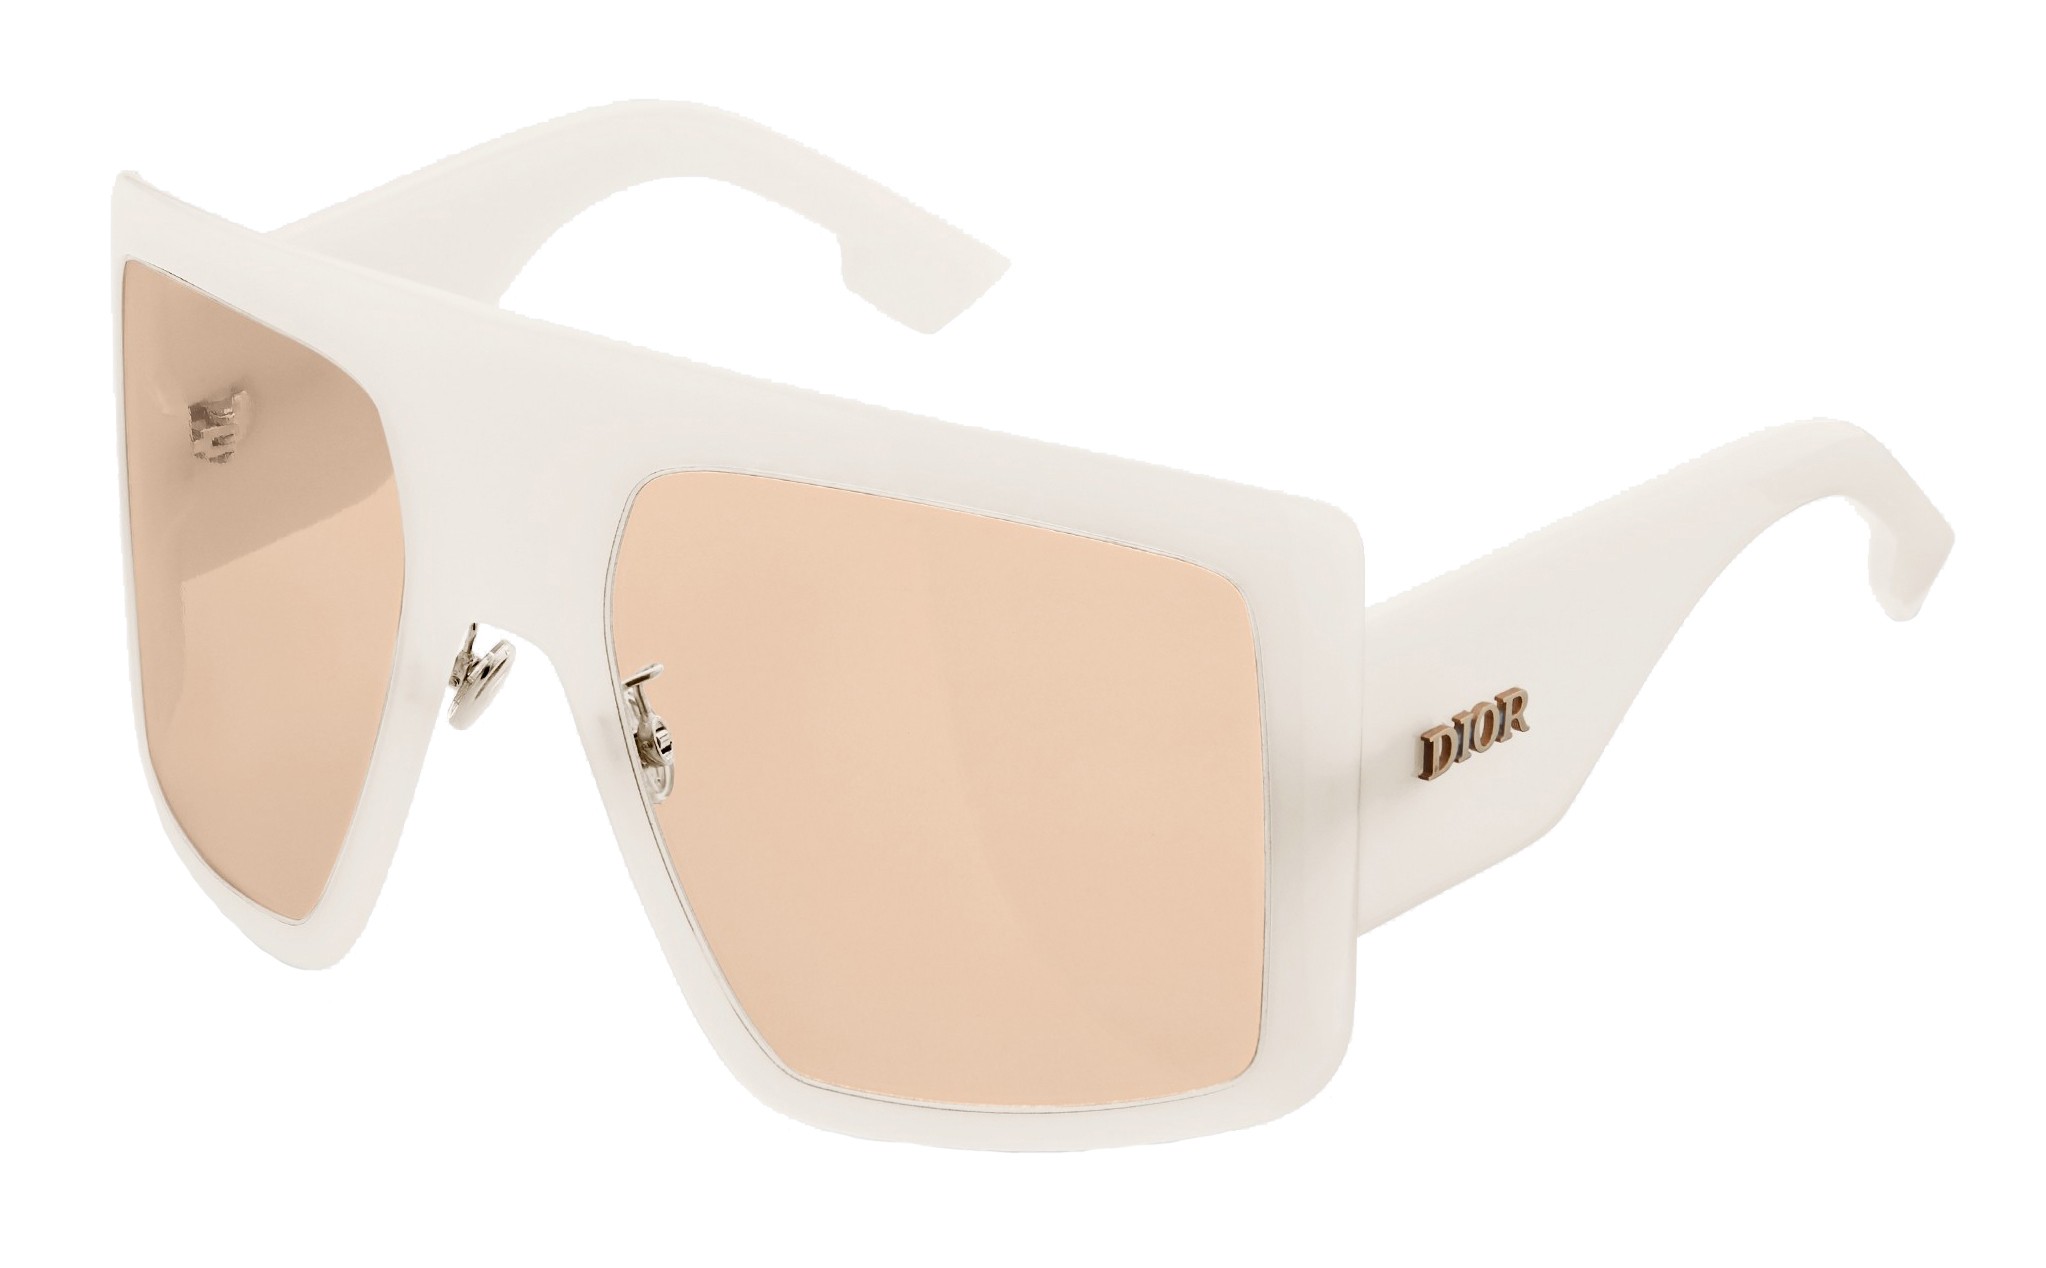 dior oversized sunglasses 2019